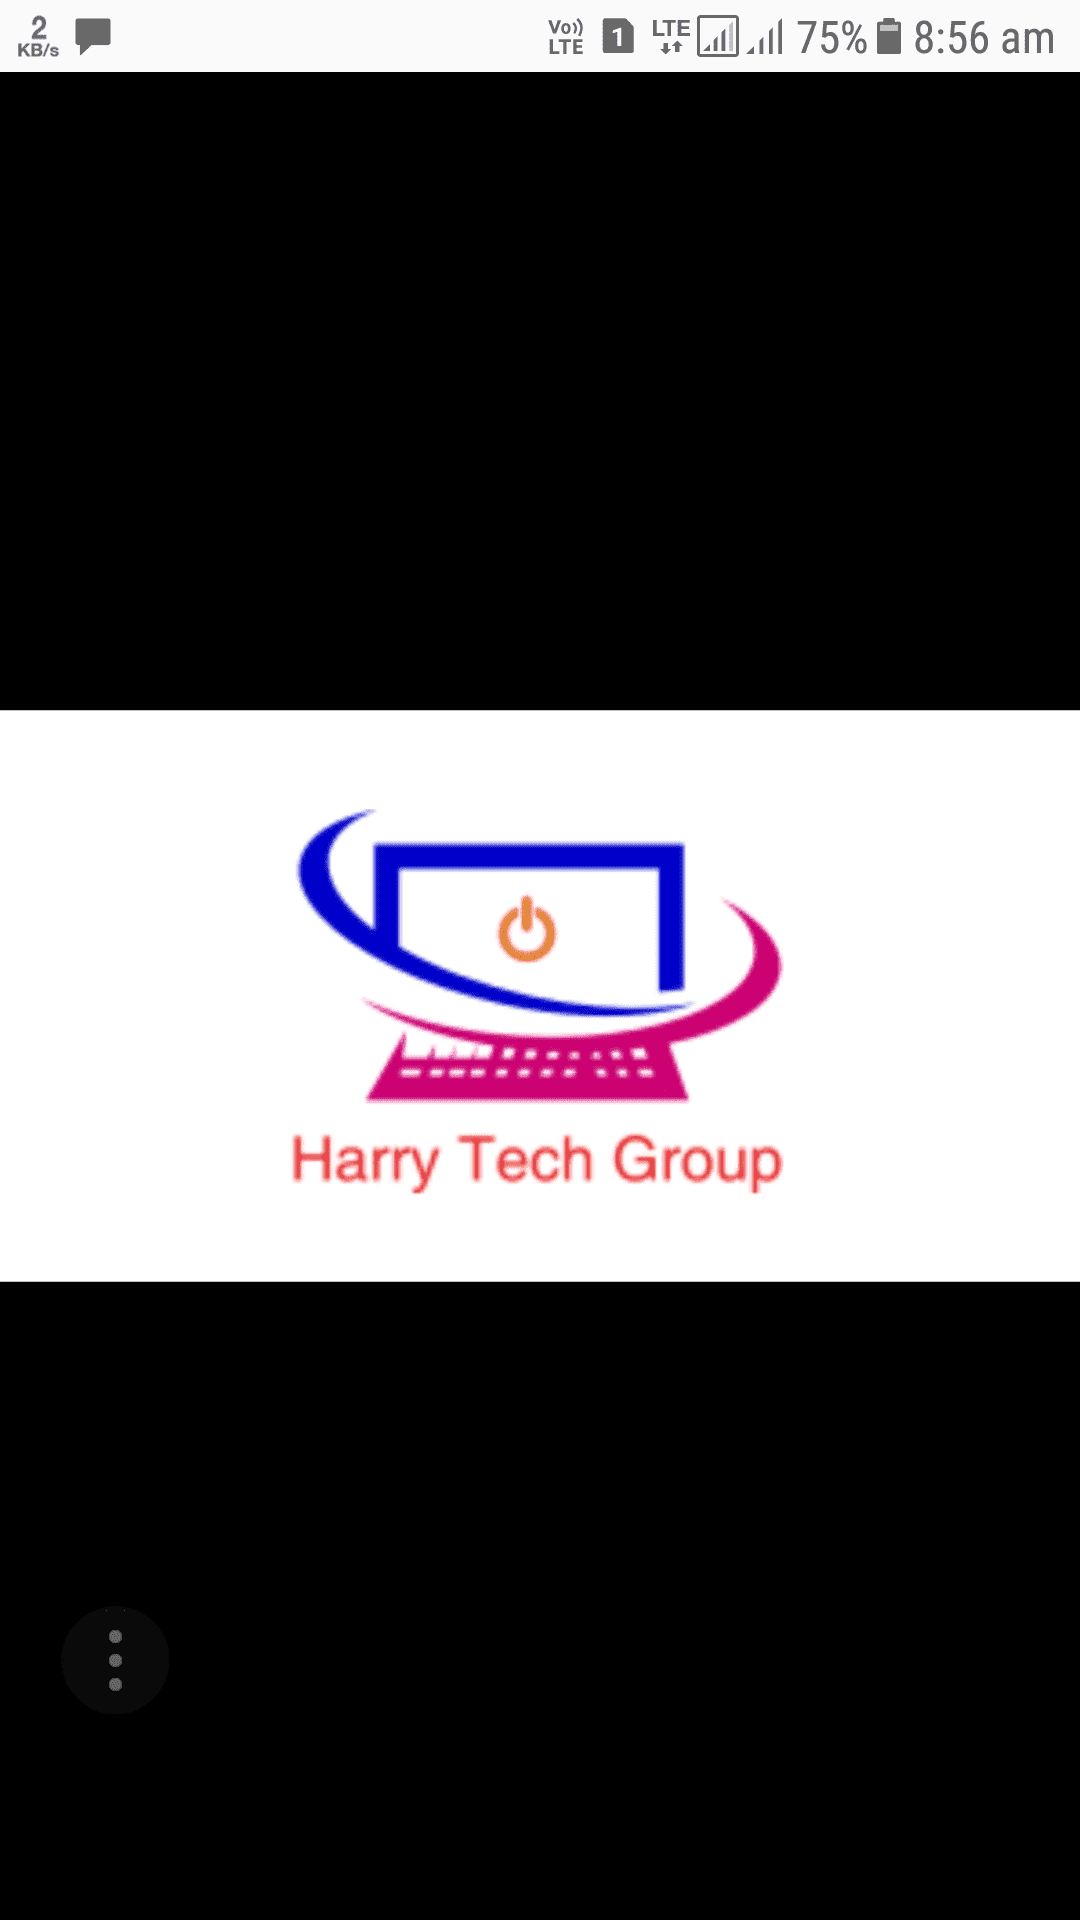 Harry Tech Group